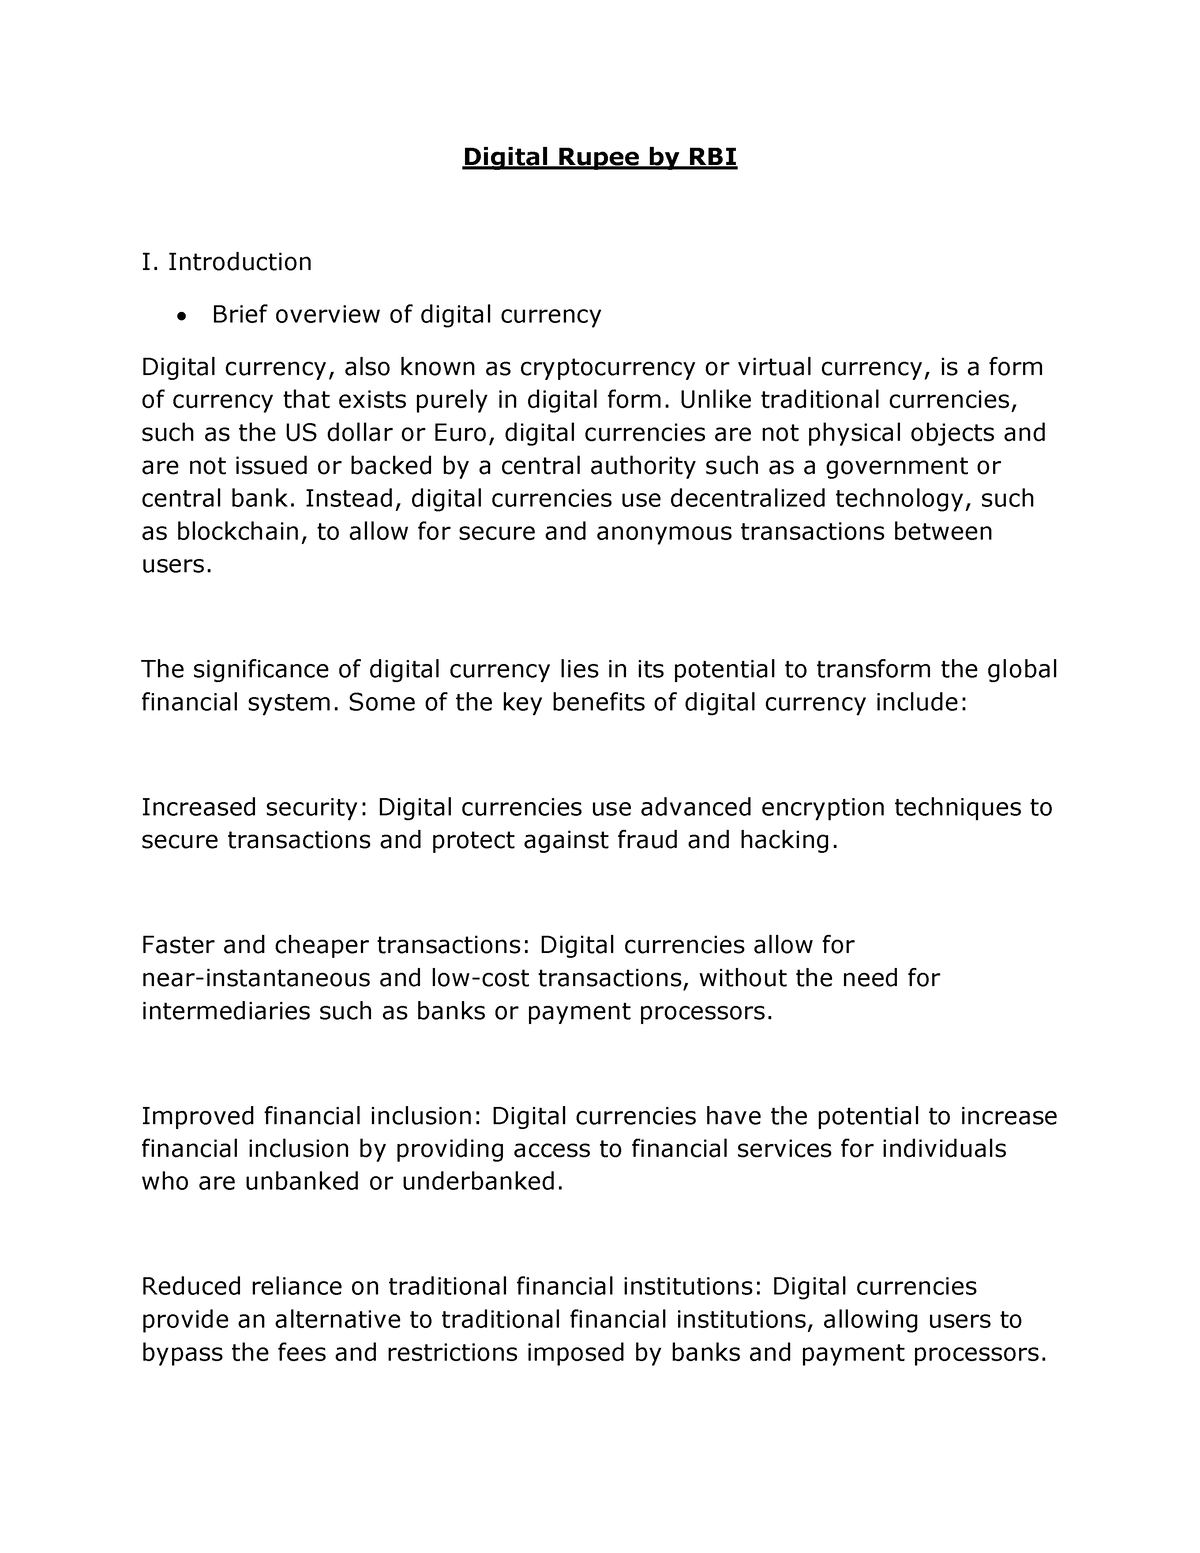 essay on rbi digital currency in 250 words